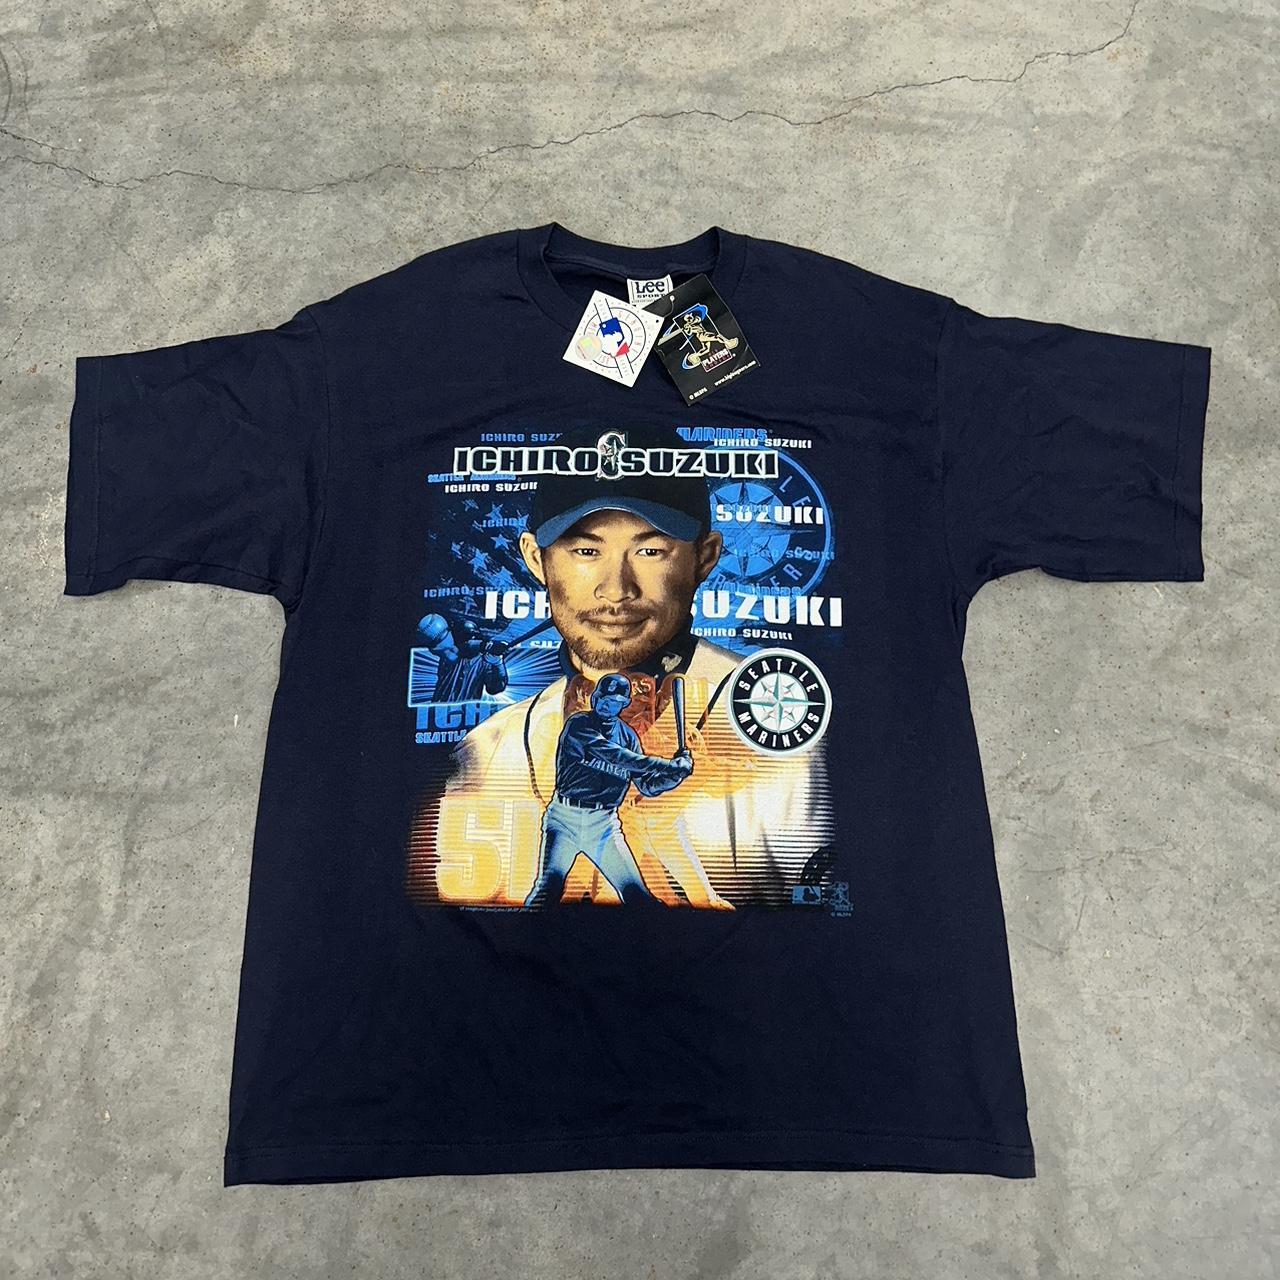 Seattle Mariners Apparel & Gear, Ichiro Suzuki Shirts